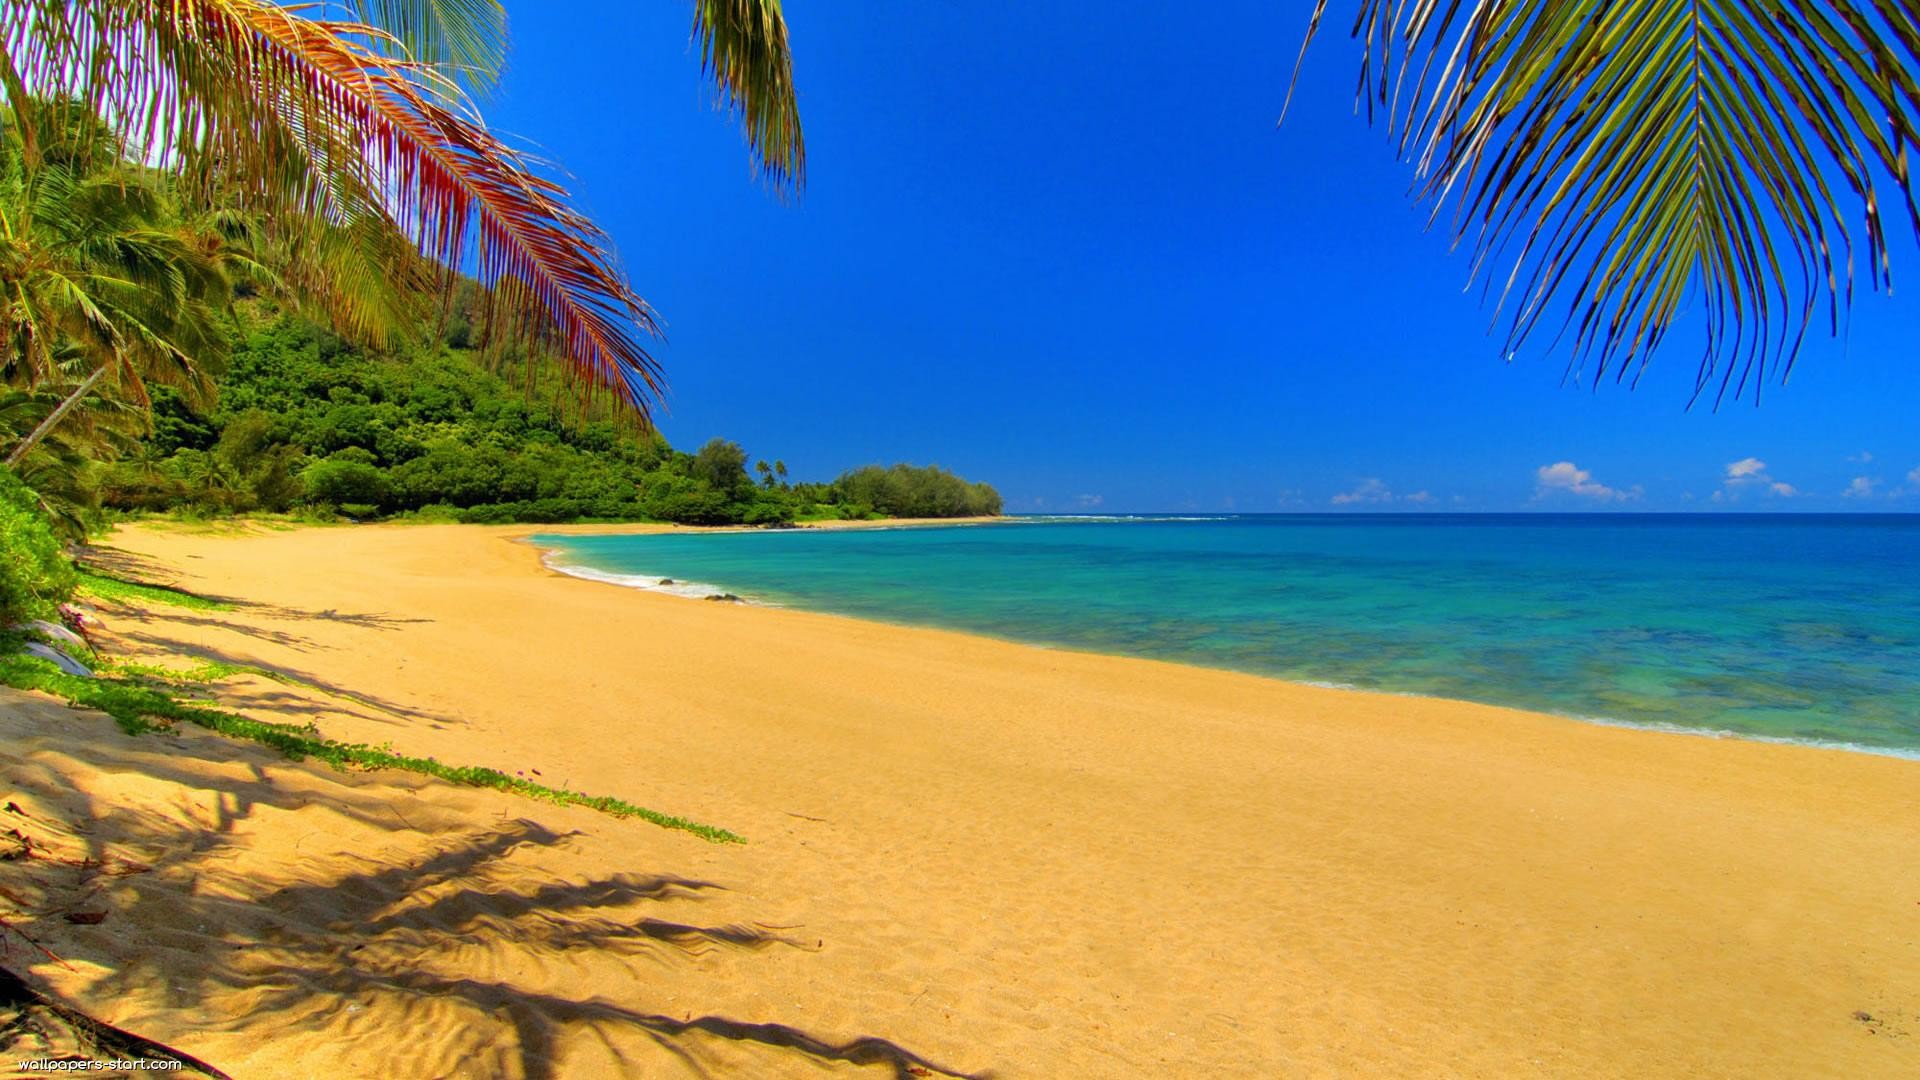 Wallpaper Summer, beach, palm trees, sea 3840x2160 UHD 4K Picture, Image